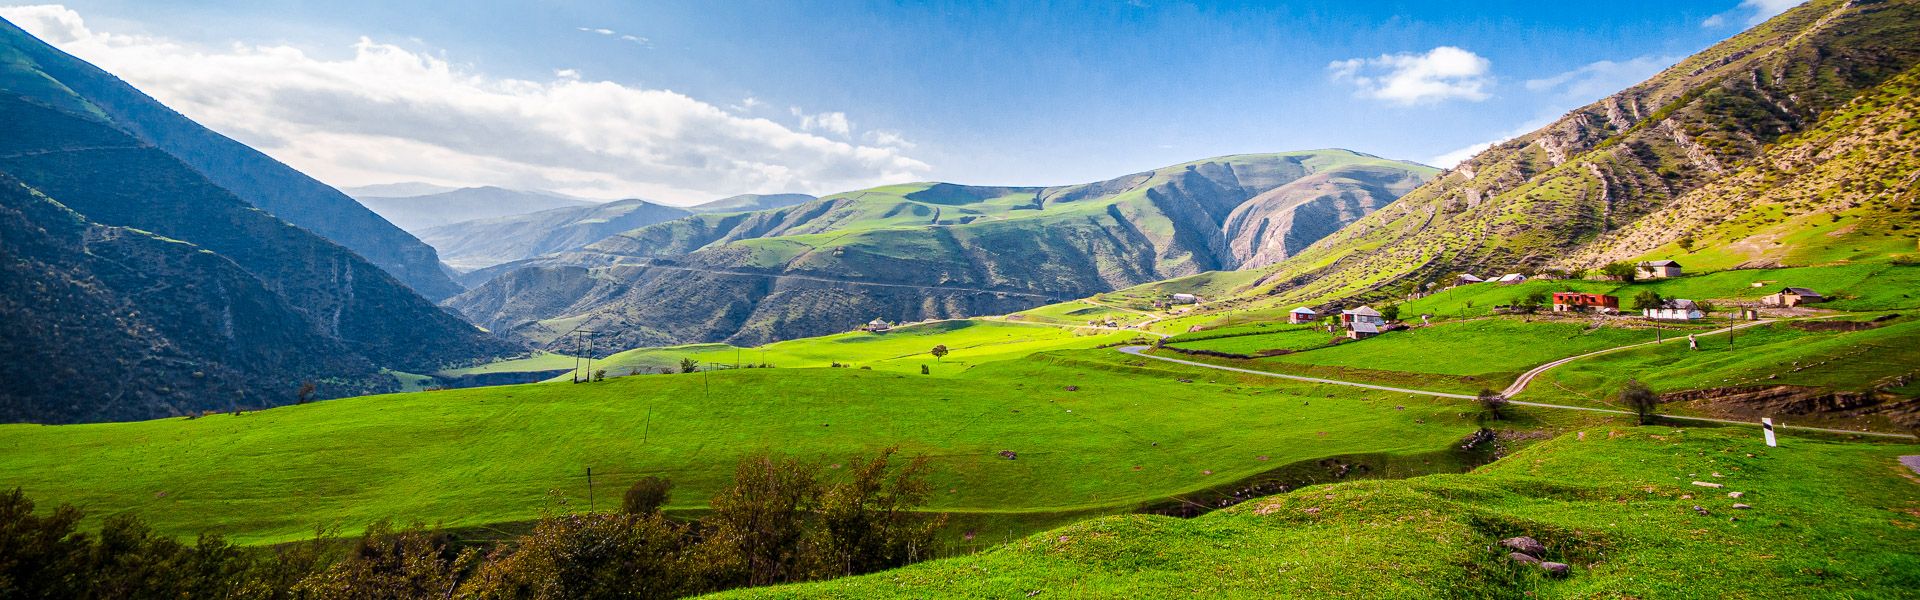 Kaukasische Berge |  Tourism Board Azerbaijan / Chamleon